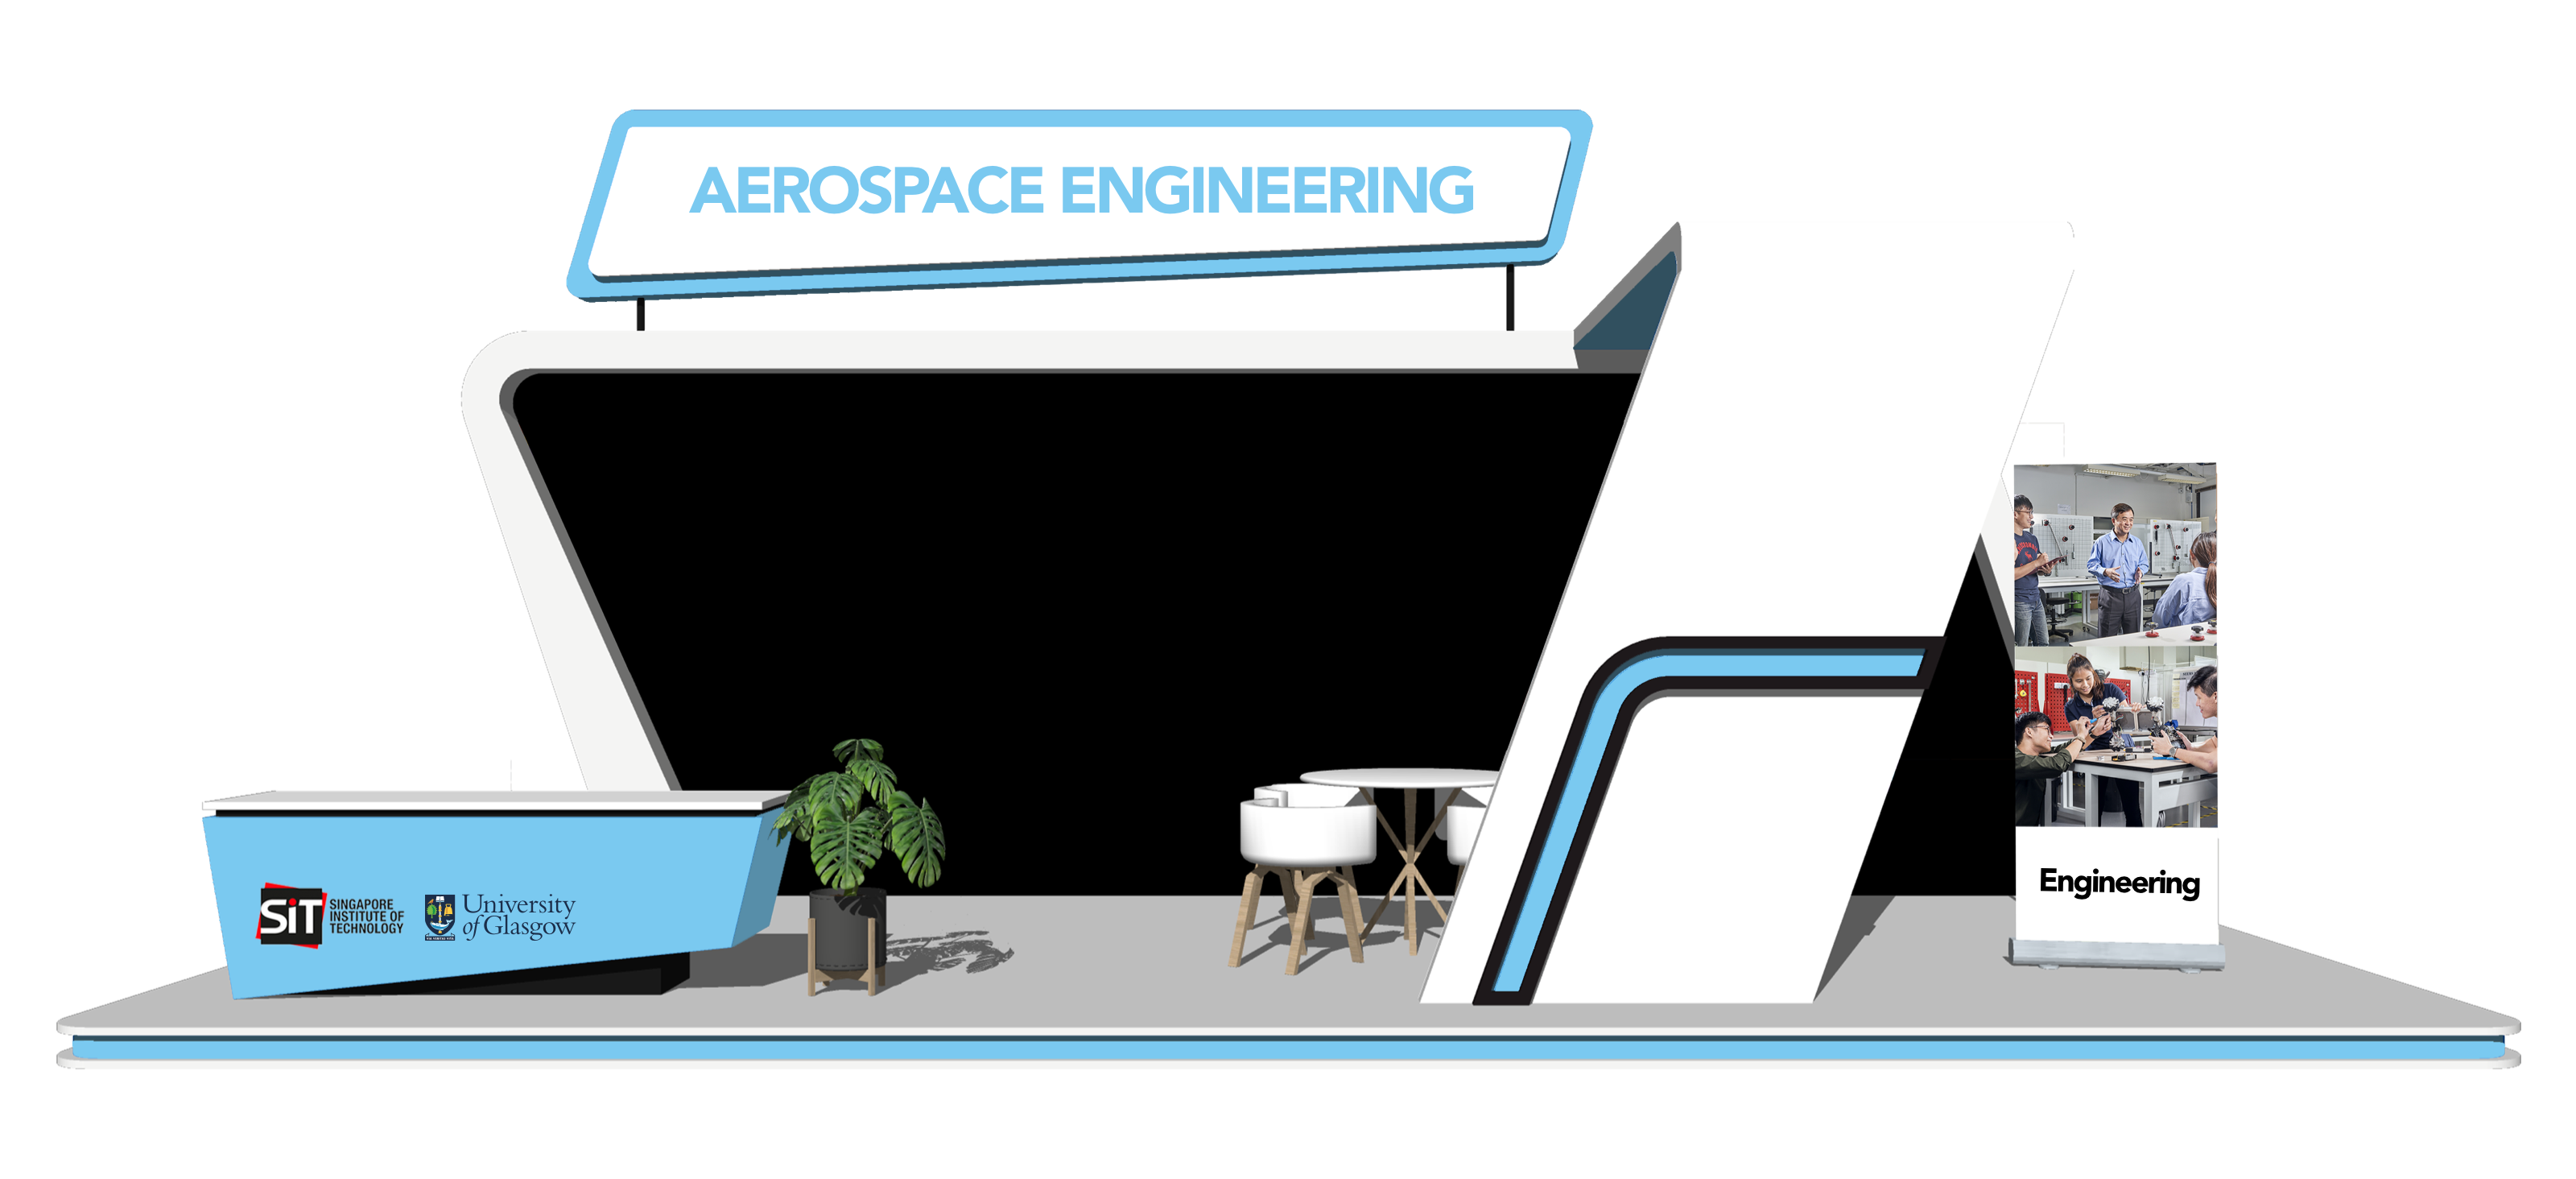 Aerospace Engineering (SIT & University of Glasgow)